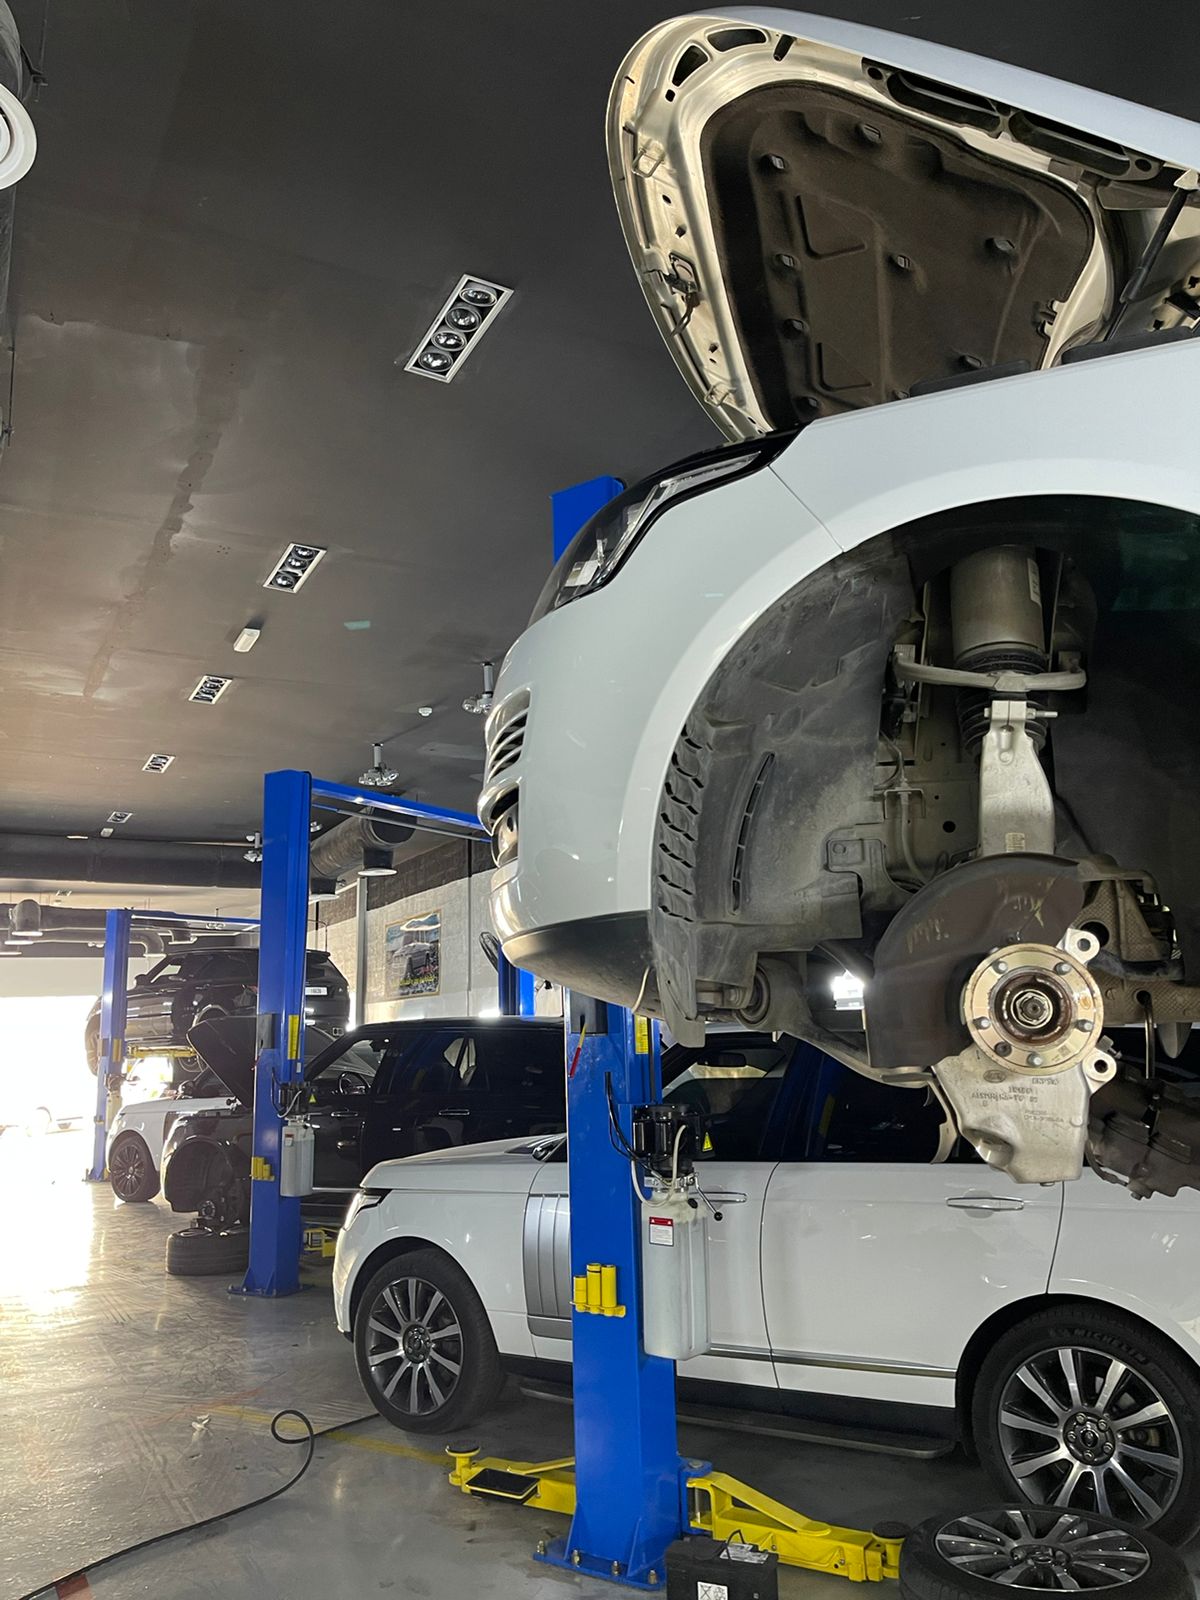 Range Rover And Land Rover Maintenance Center In Dubai